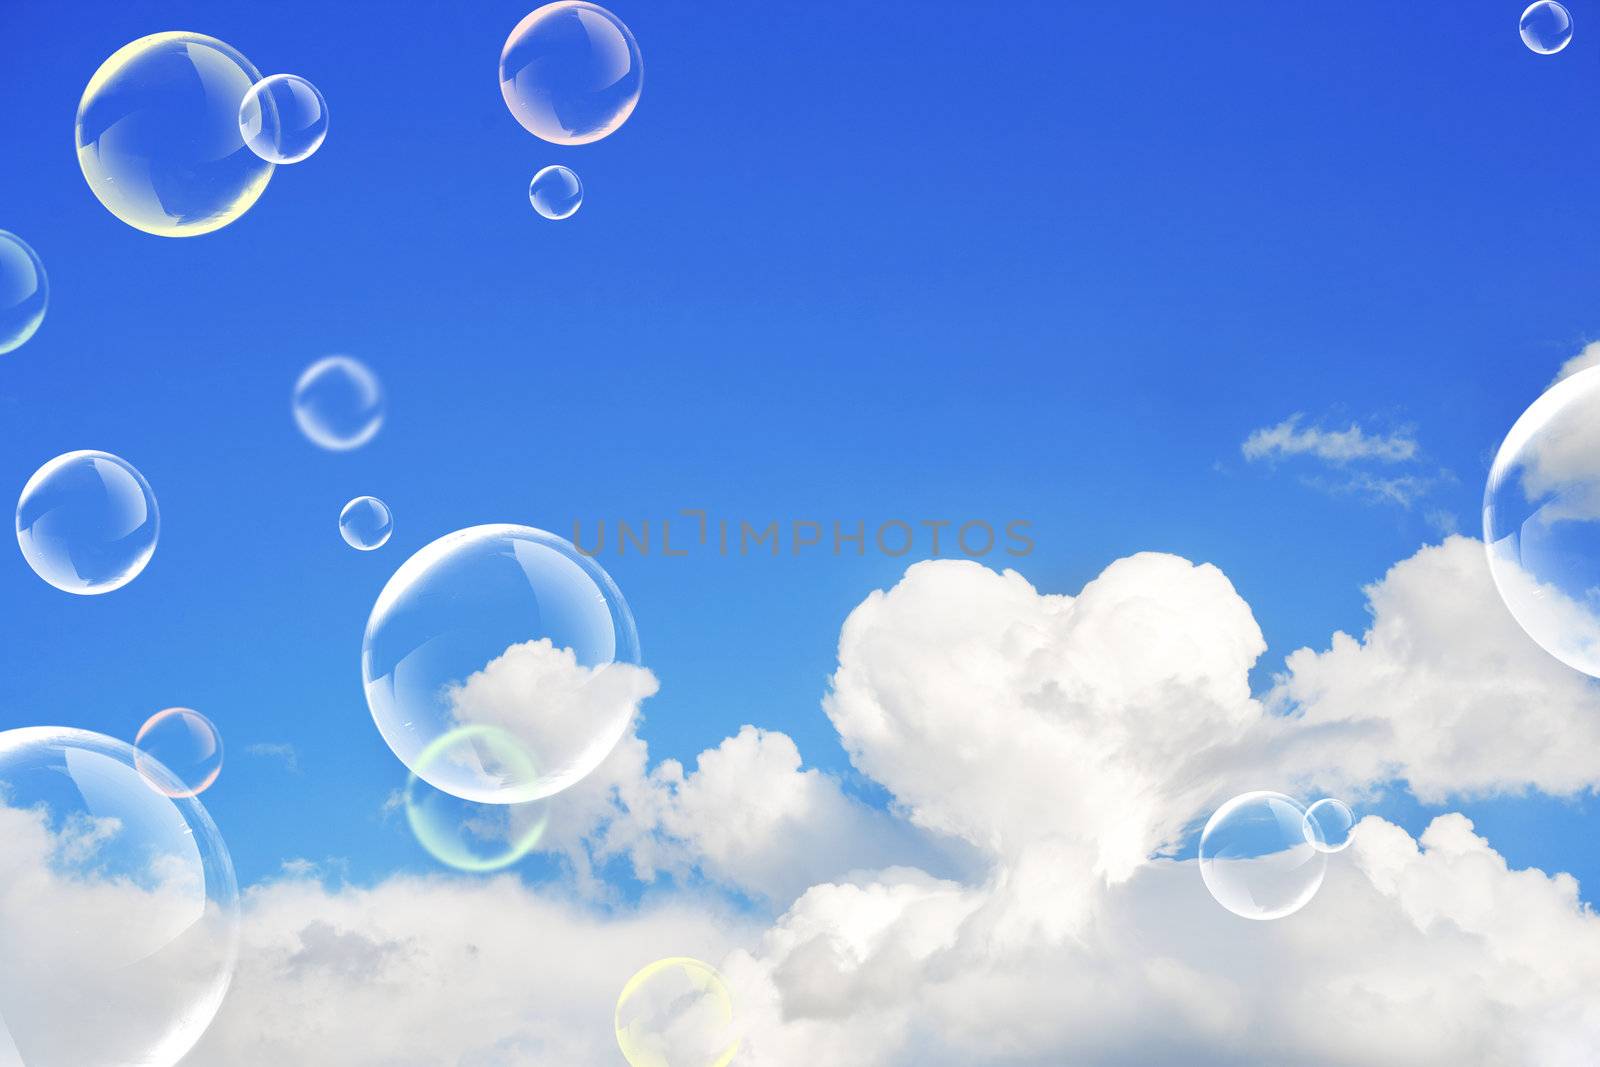 Cloud and soap bubbles by petrkurgan